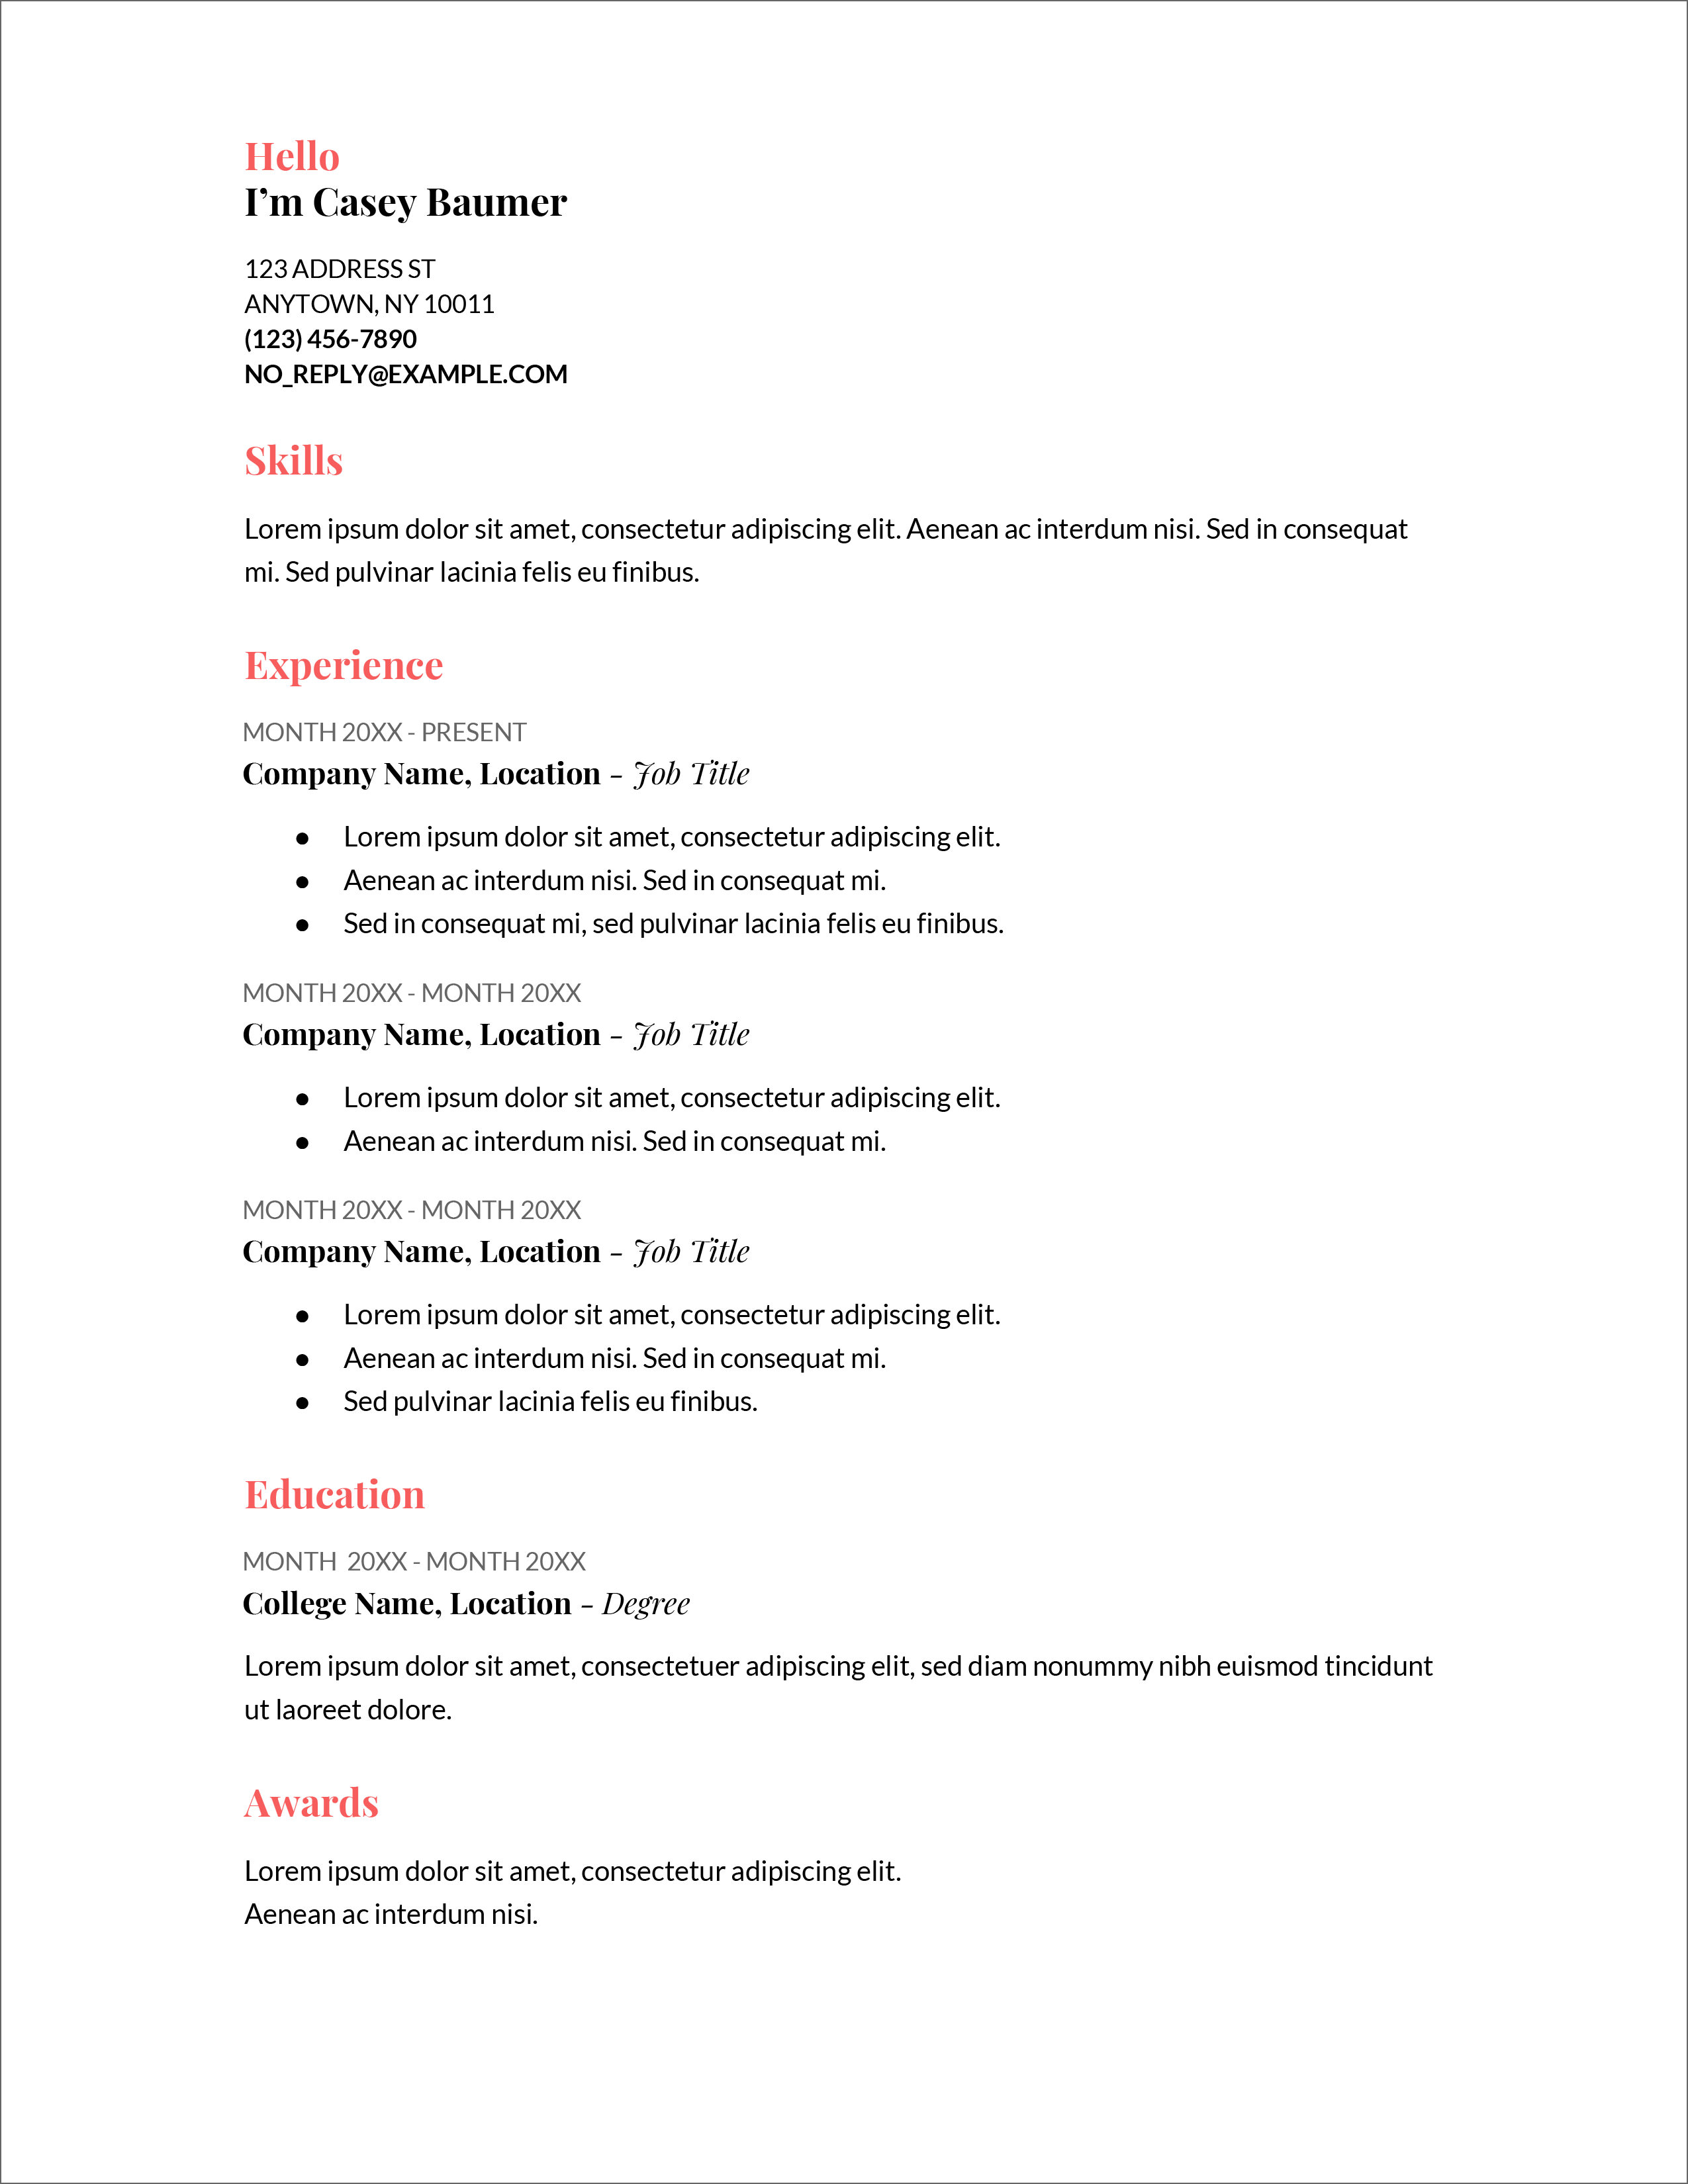 microsoft office resume templates